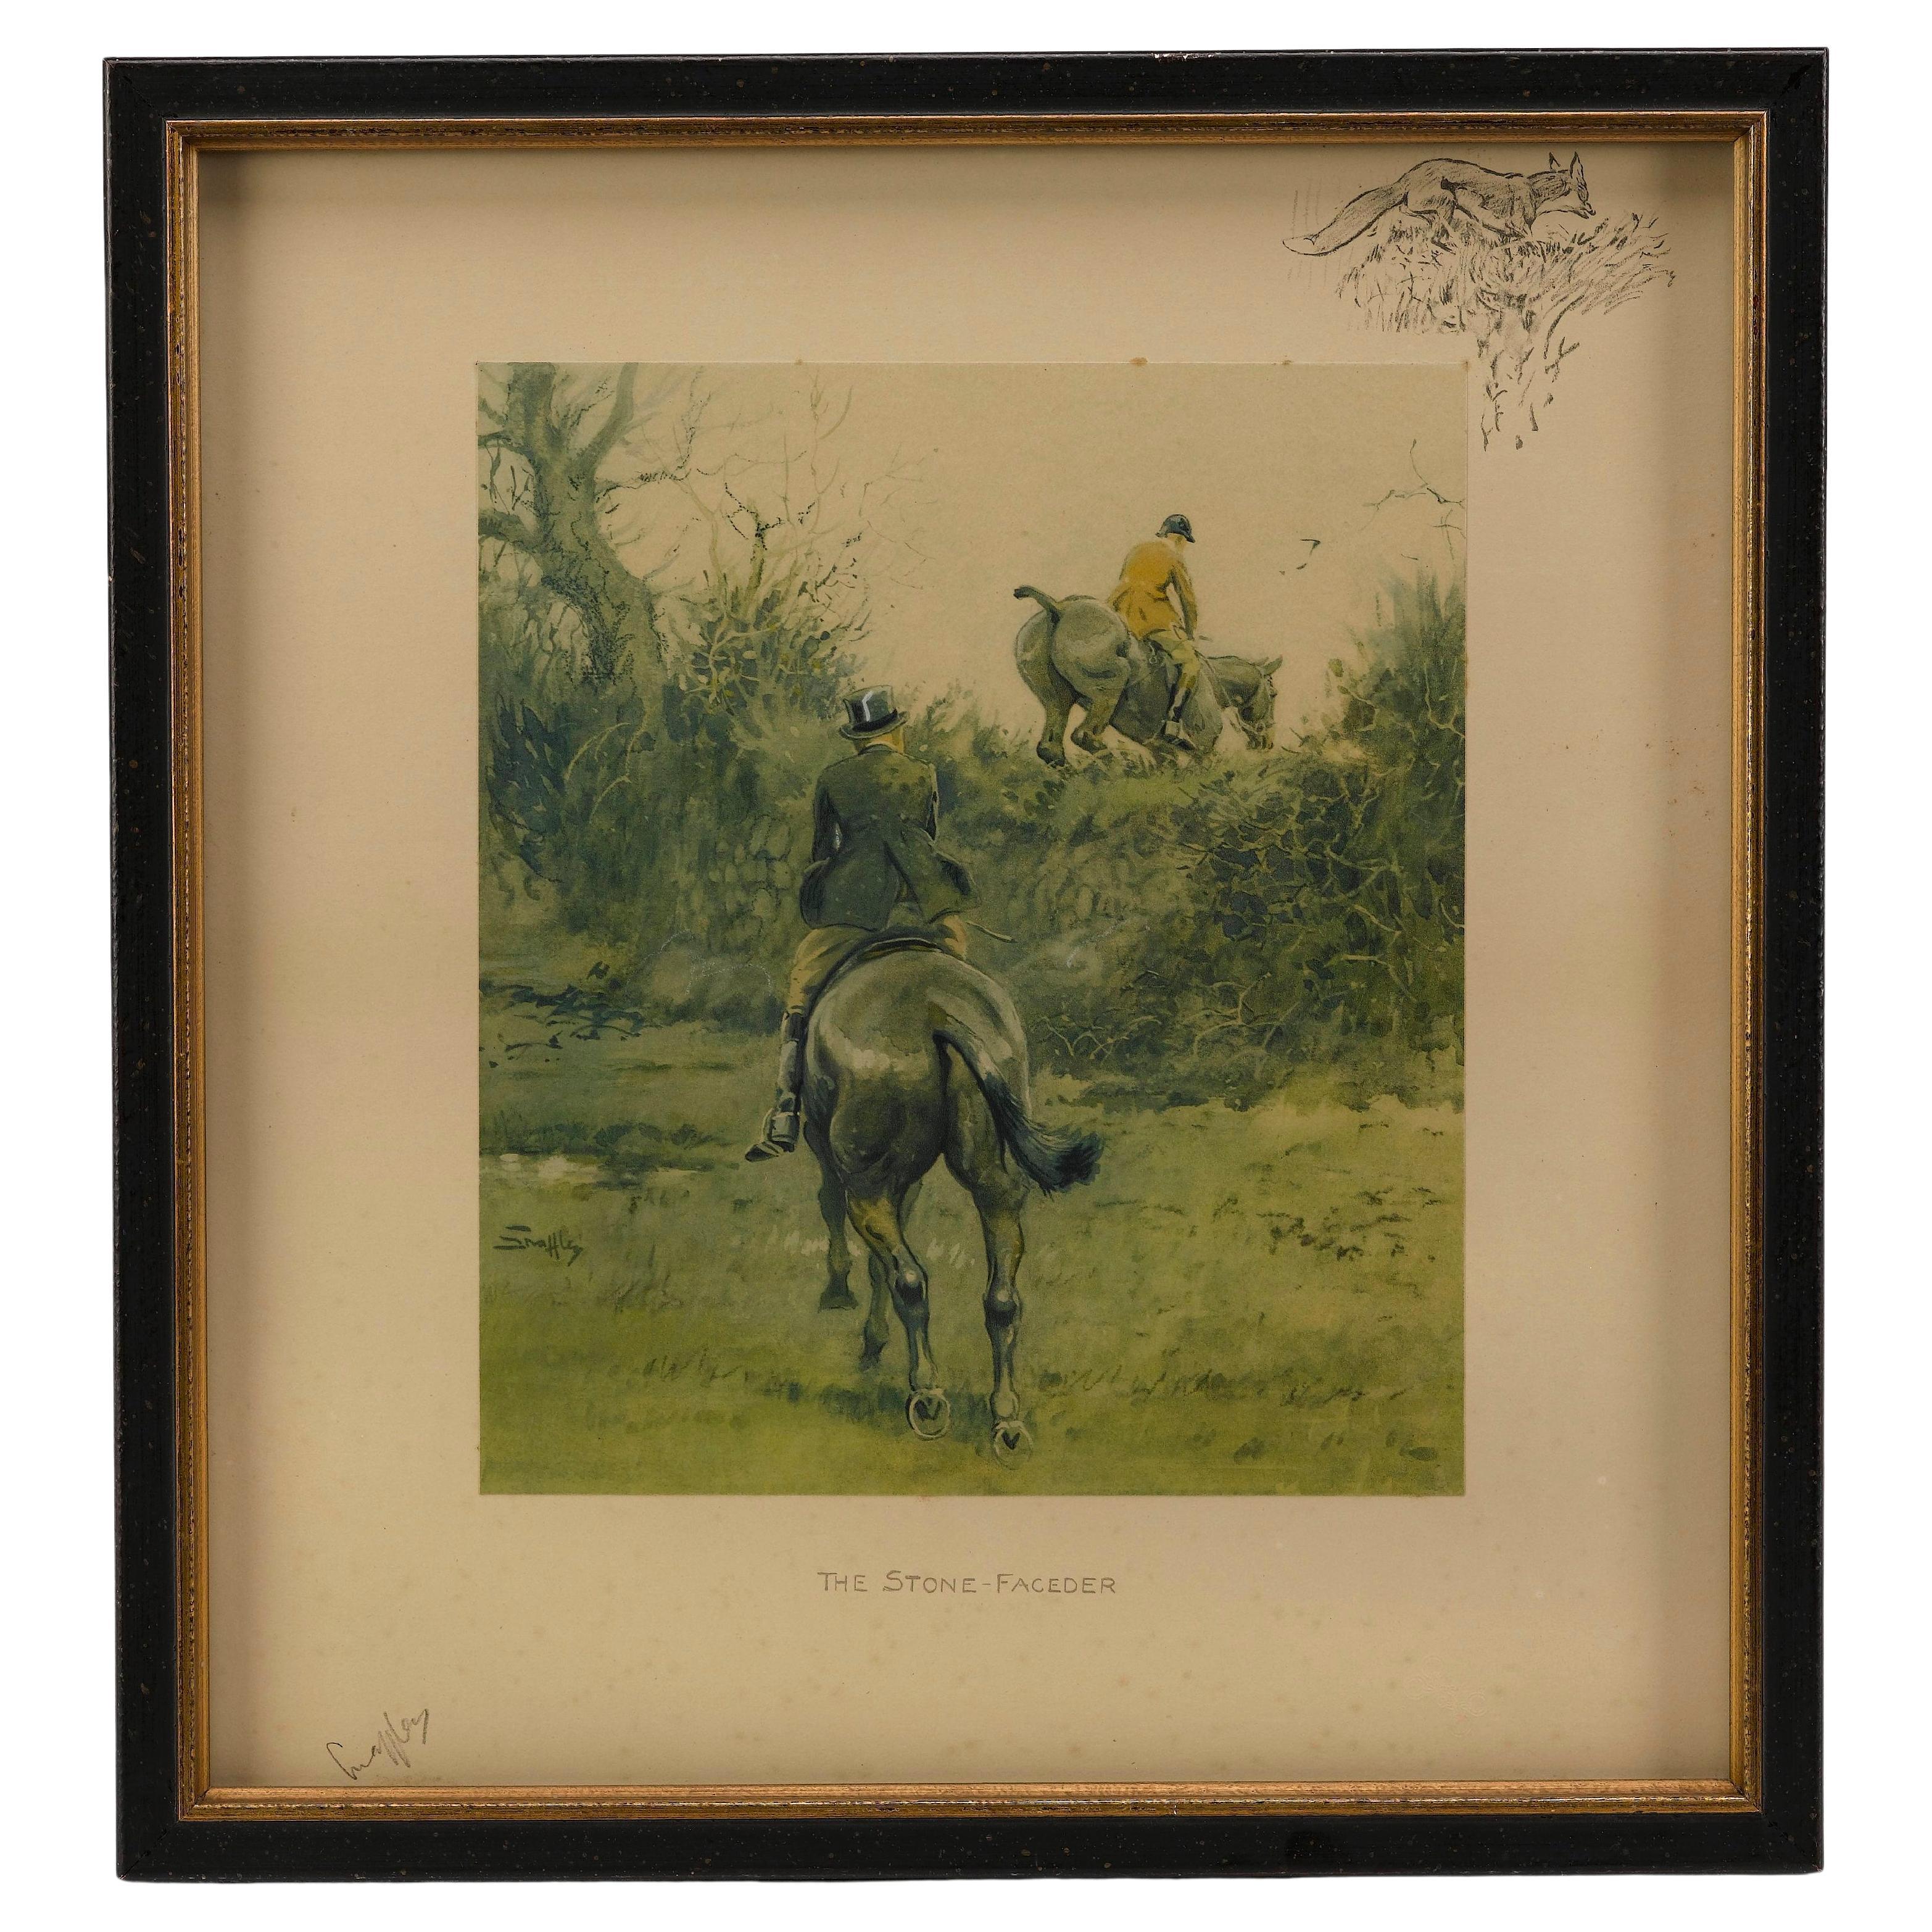 Impression cheval ancienne The Stone Faceder signée par Snaffles, 1934